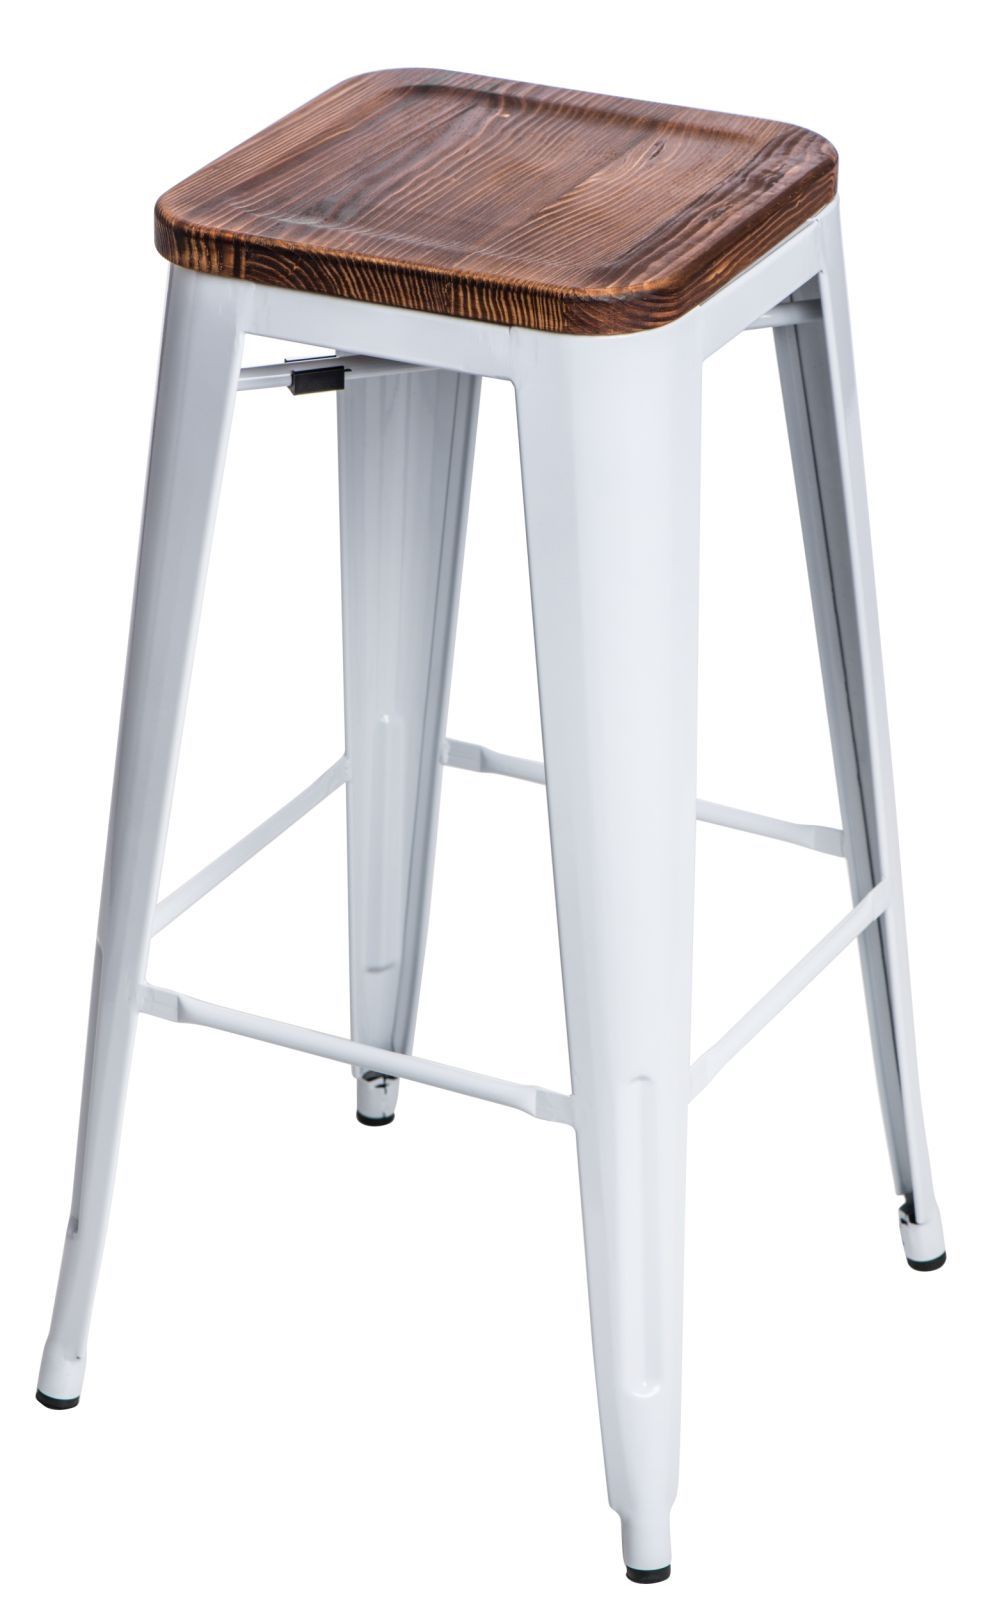  Barová stolička Paris Wood 75cm biela sosna - mobler.sk